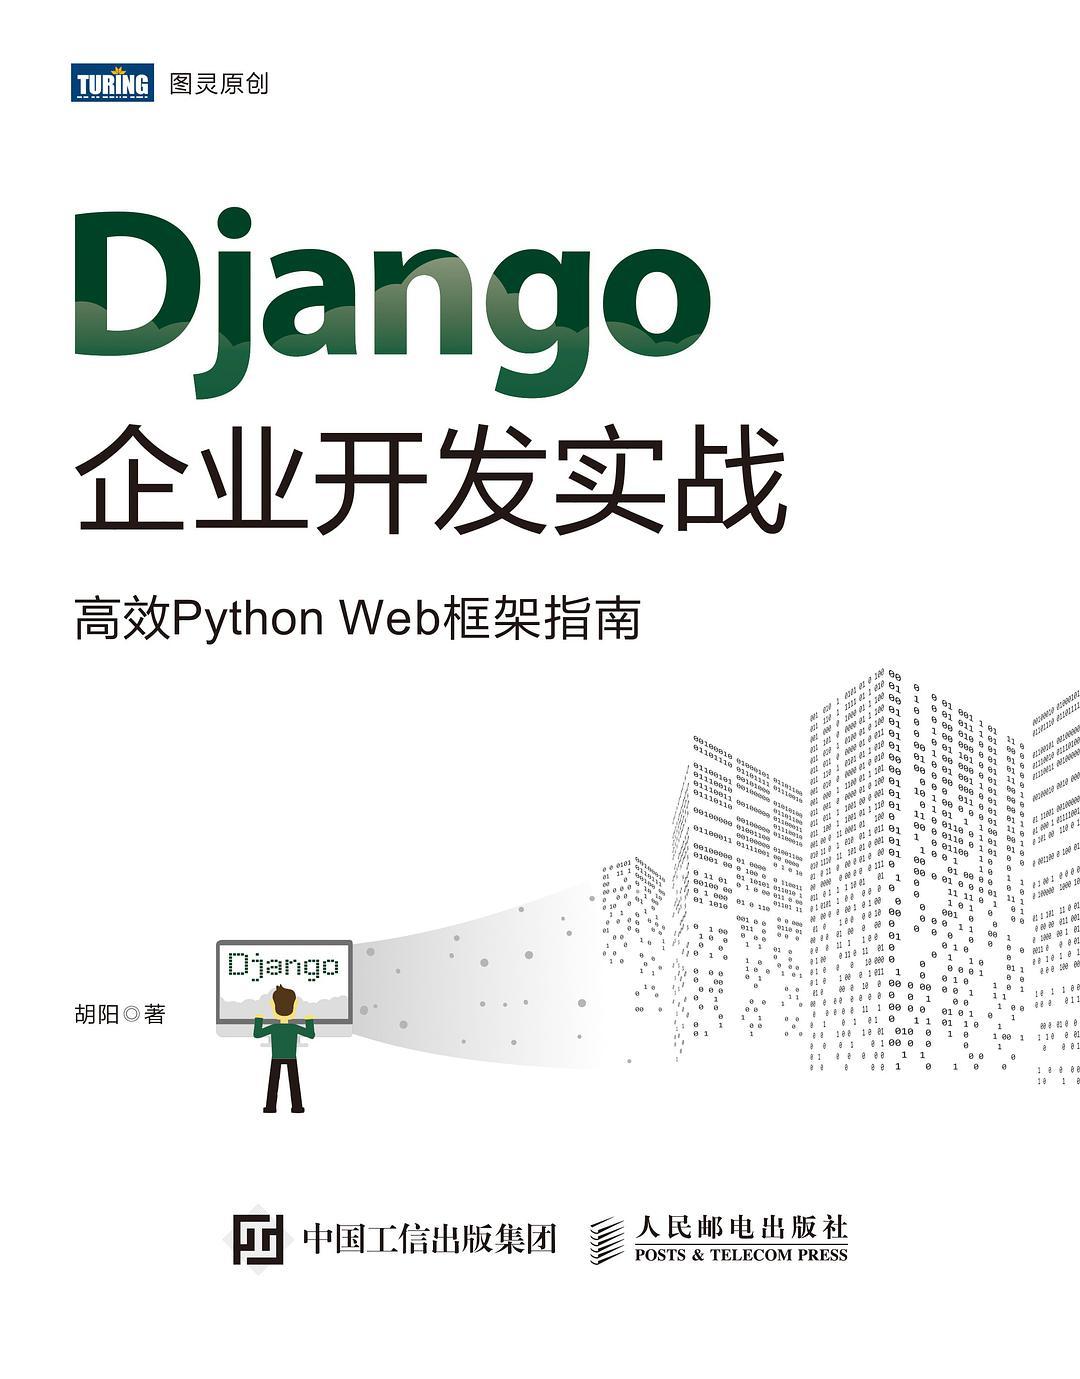 Django企业开发实战高效Python教程Web框架指南pdf电子书籍下载百度云